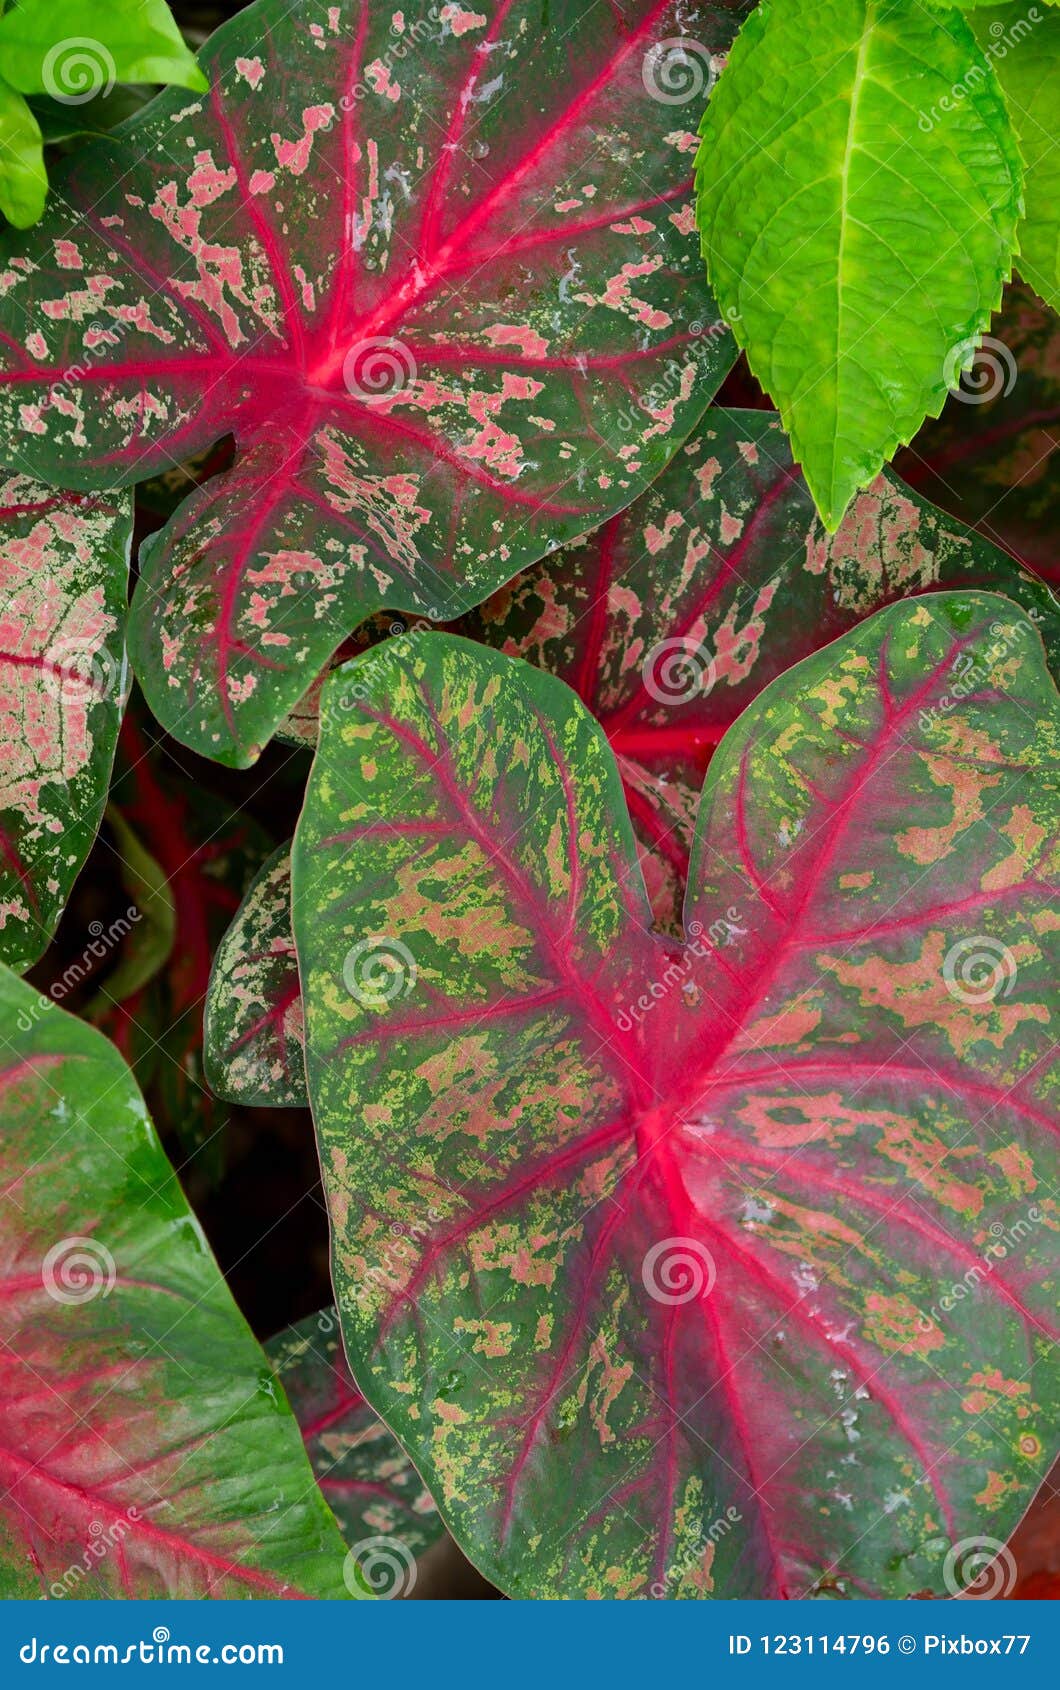 Caladium Leaf, Tropical Plant Stock Photo - Image of beautiful, pink ...